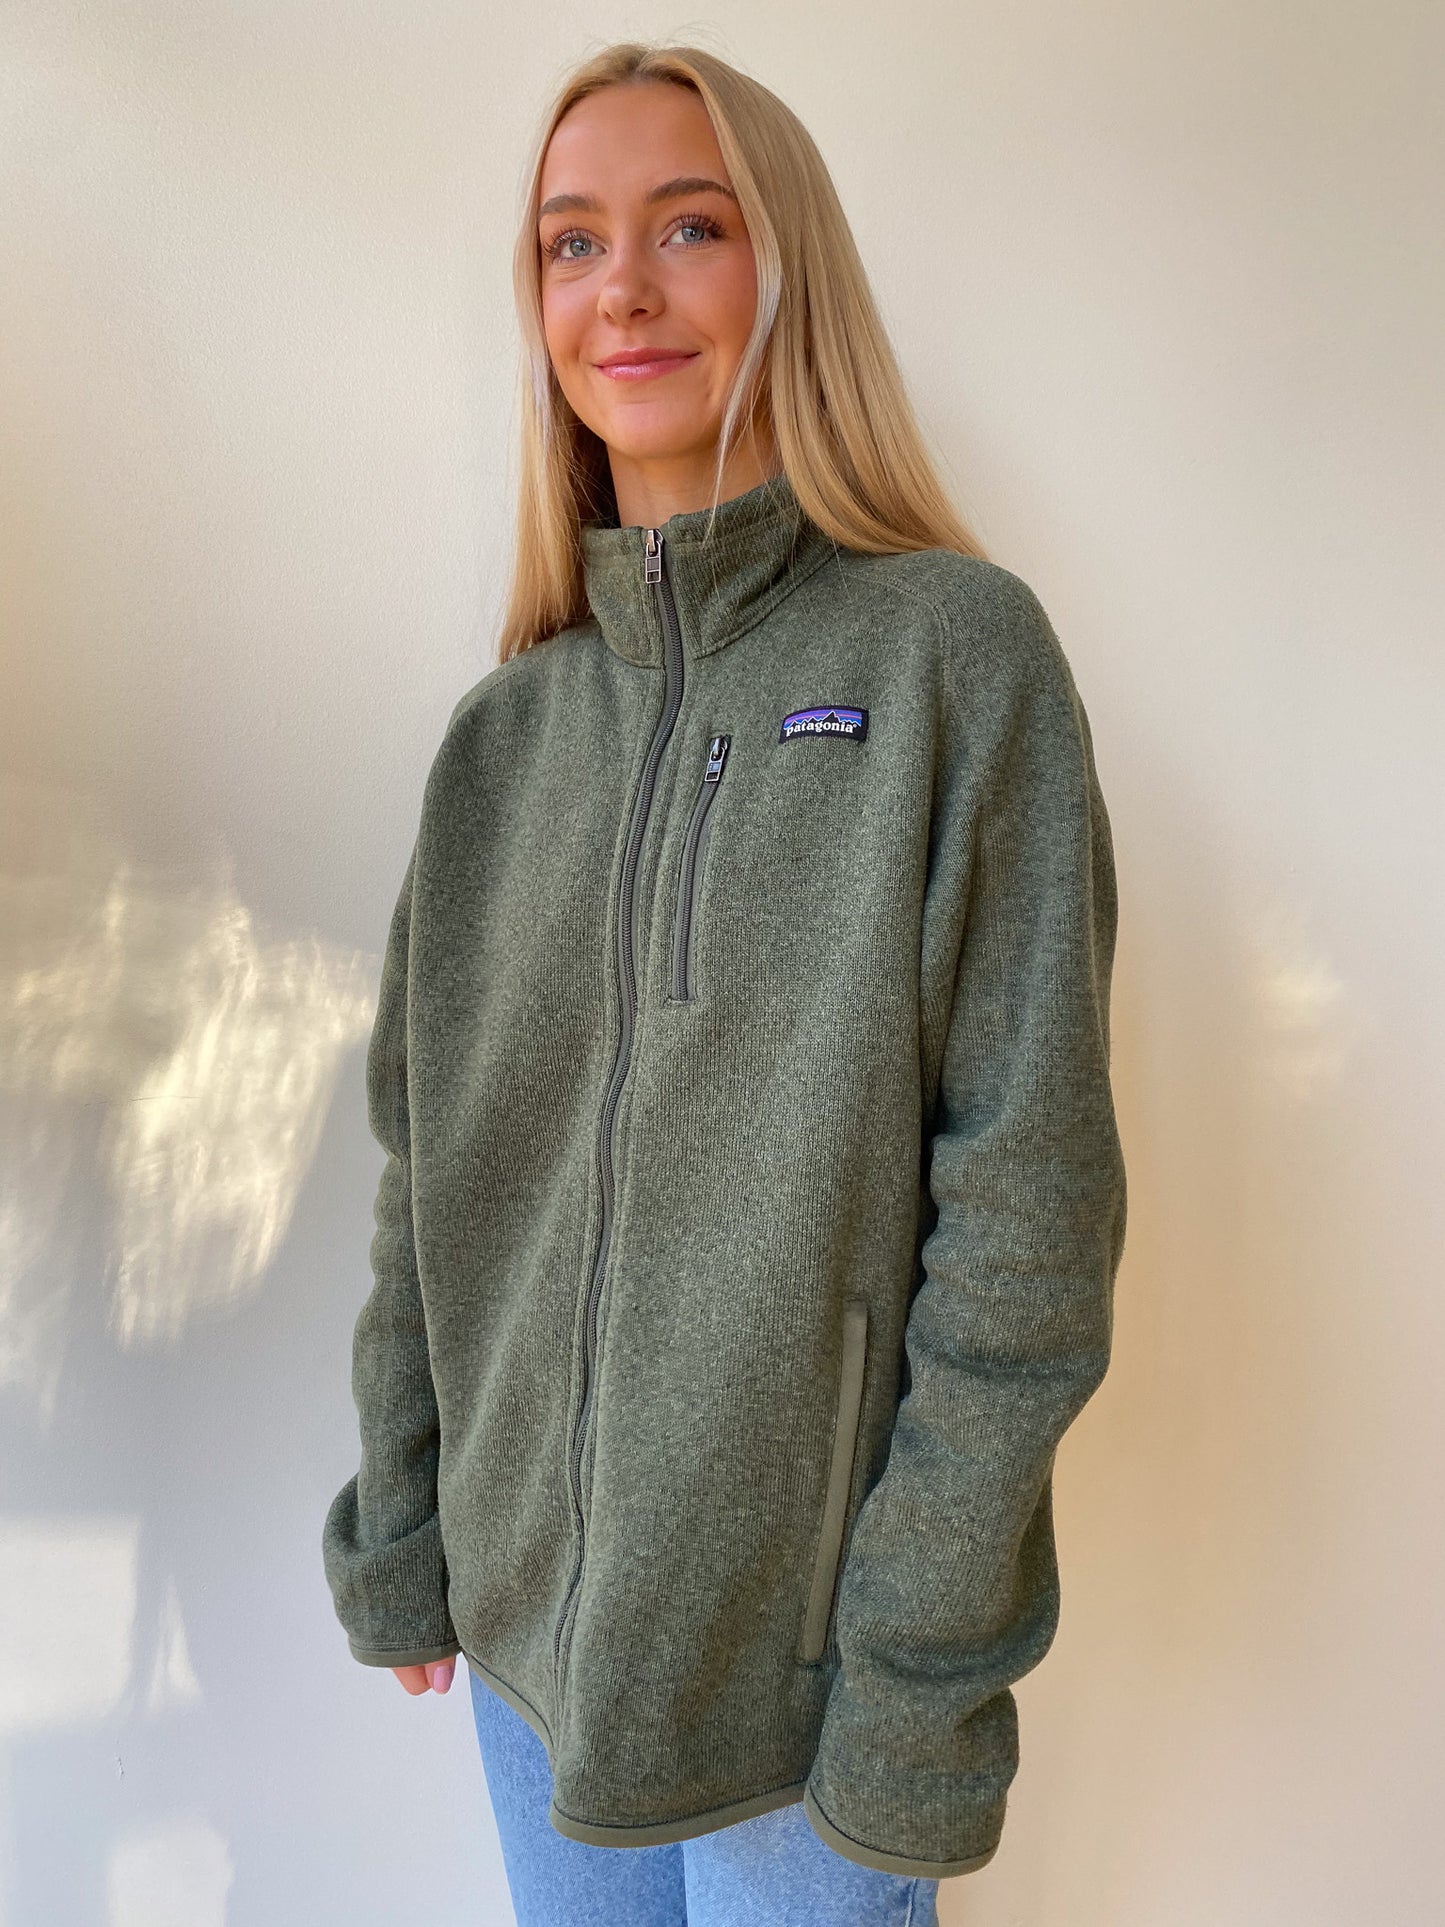 Patagonia Better Sweater Fleece Jacket—[M]